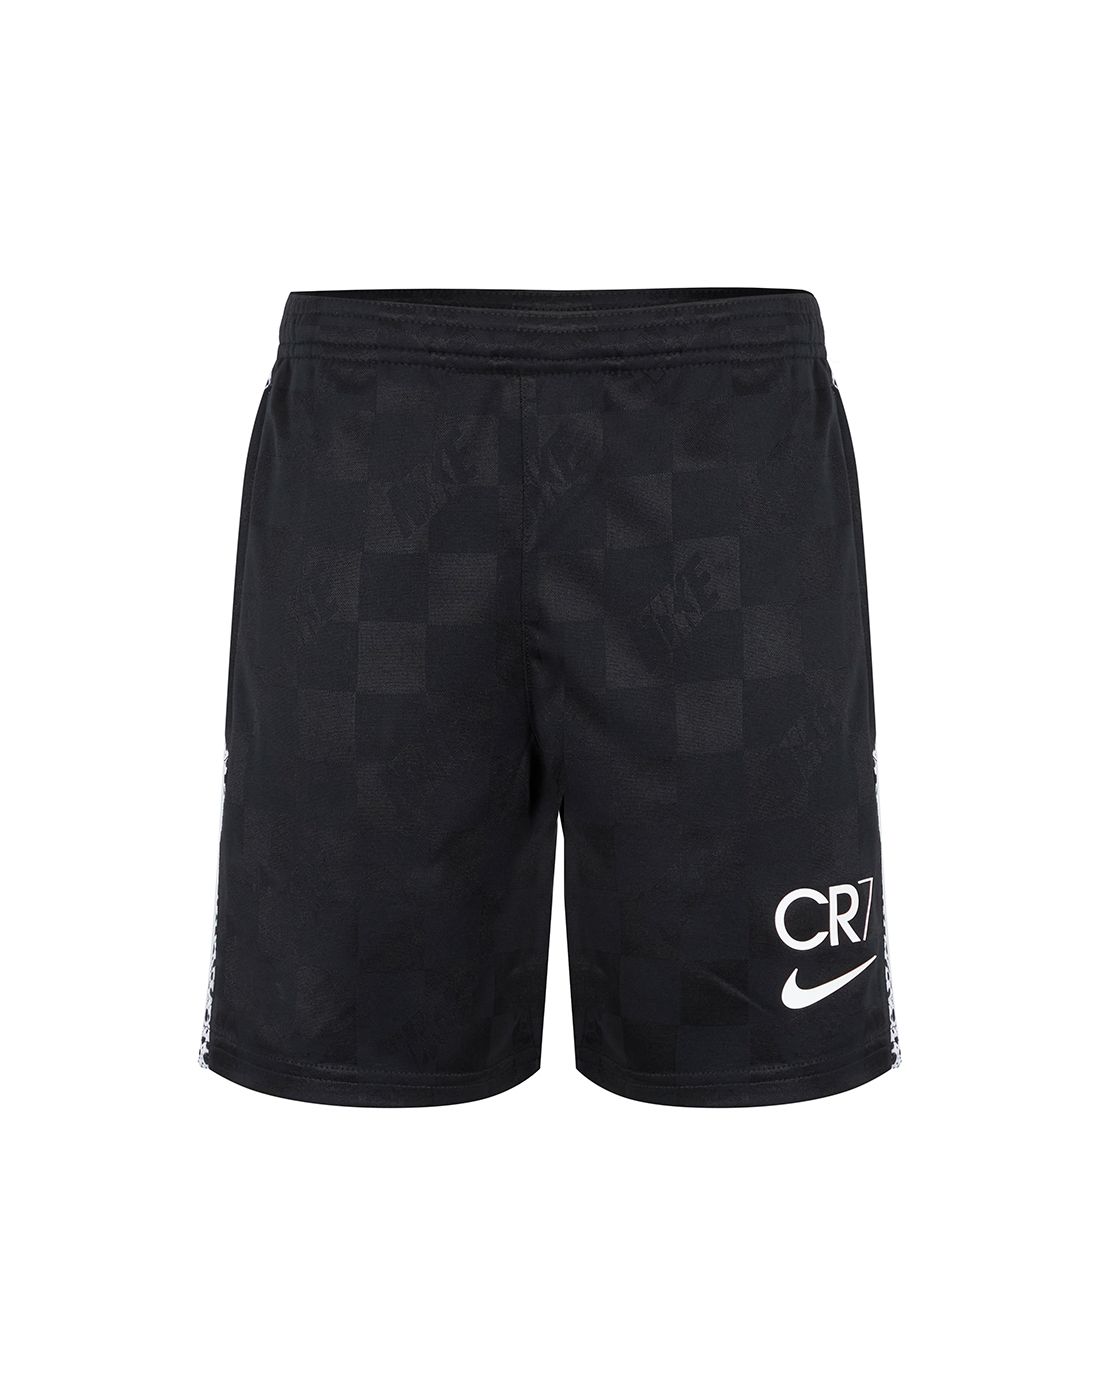 Nike Older Kids CR7 Dry Shorts - Black | Life Style Sports EU